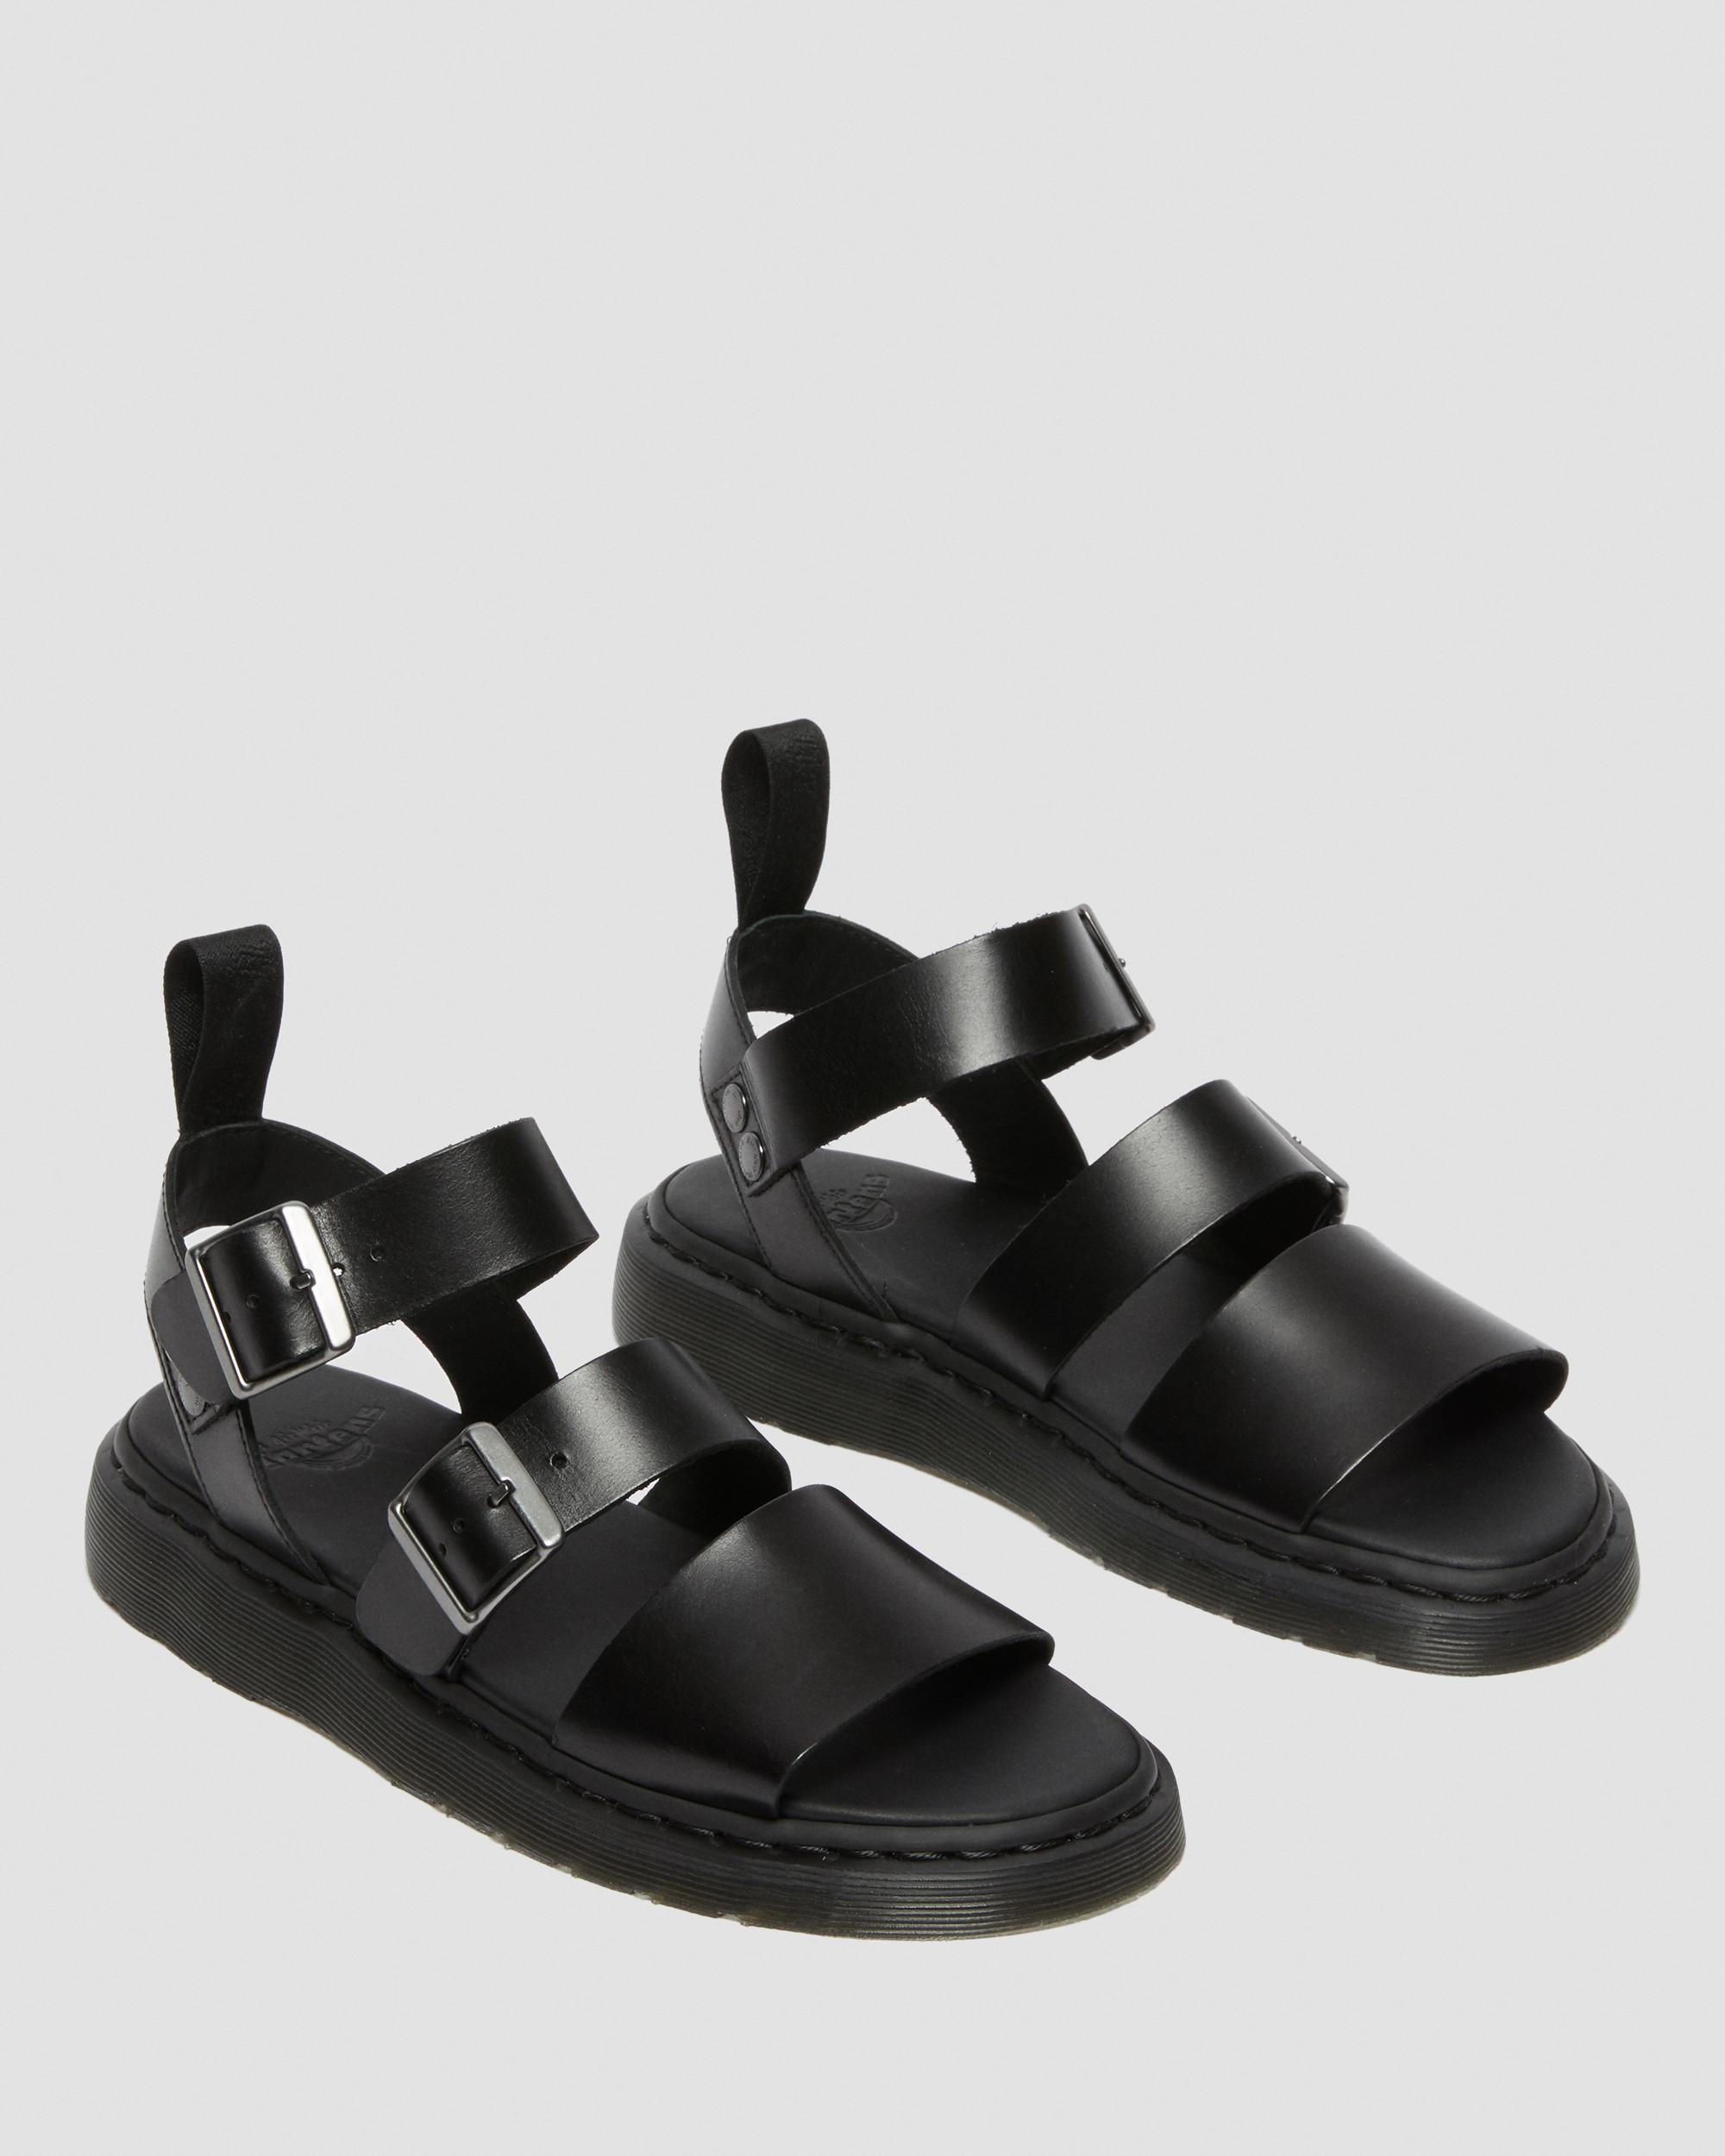 Gryphon Brando Leather Strap Sandals in Black